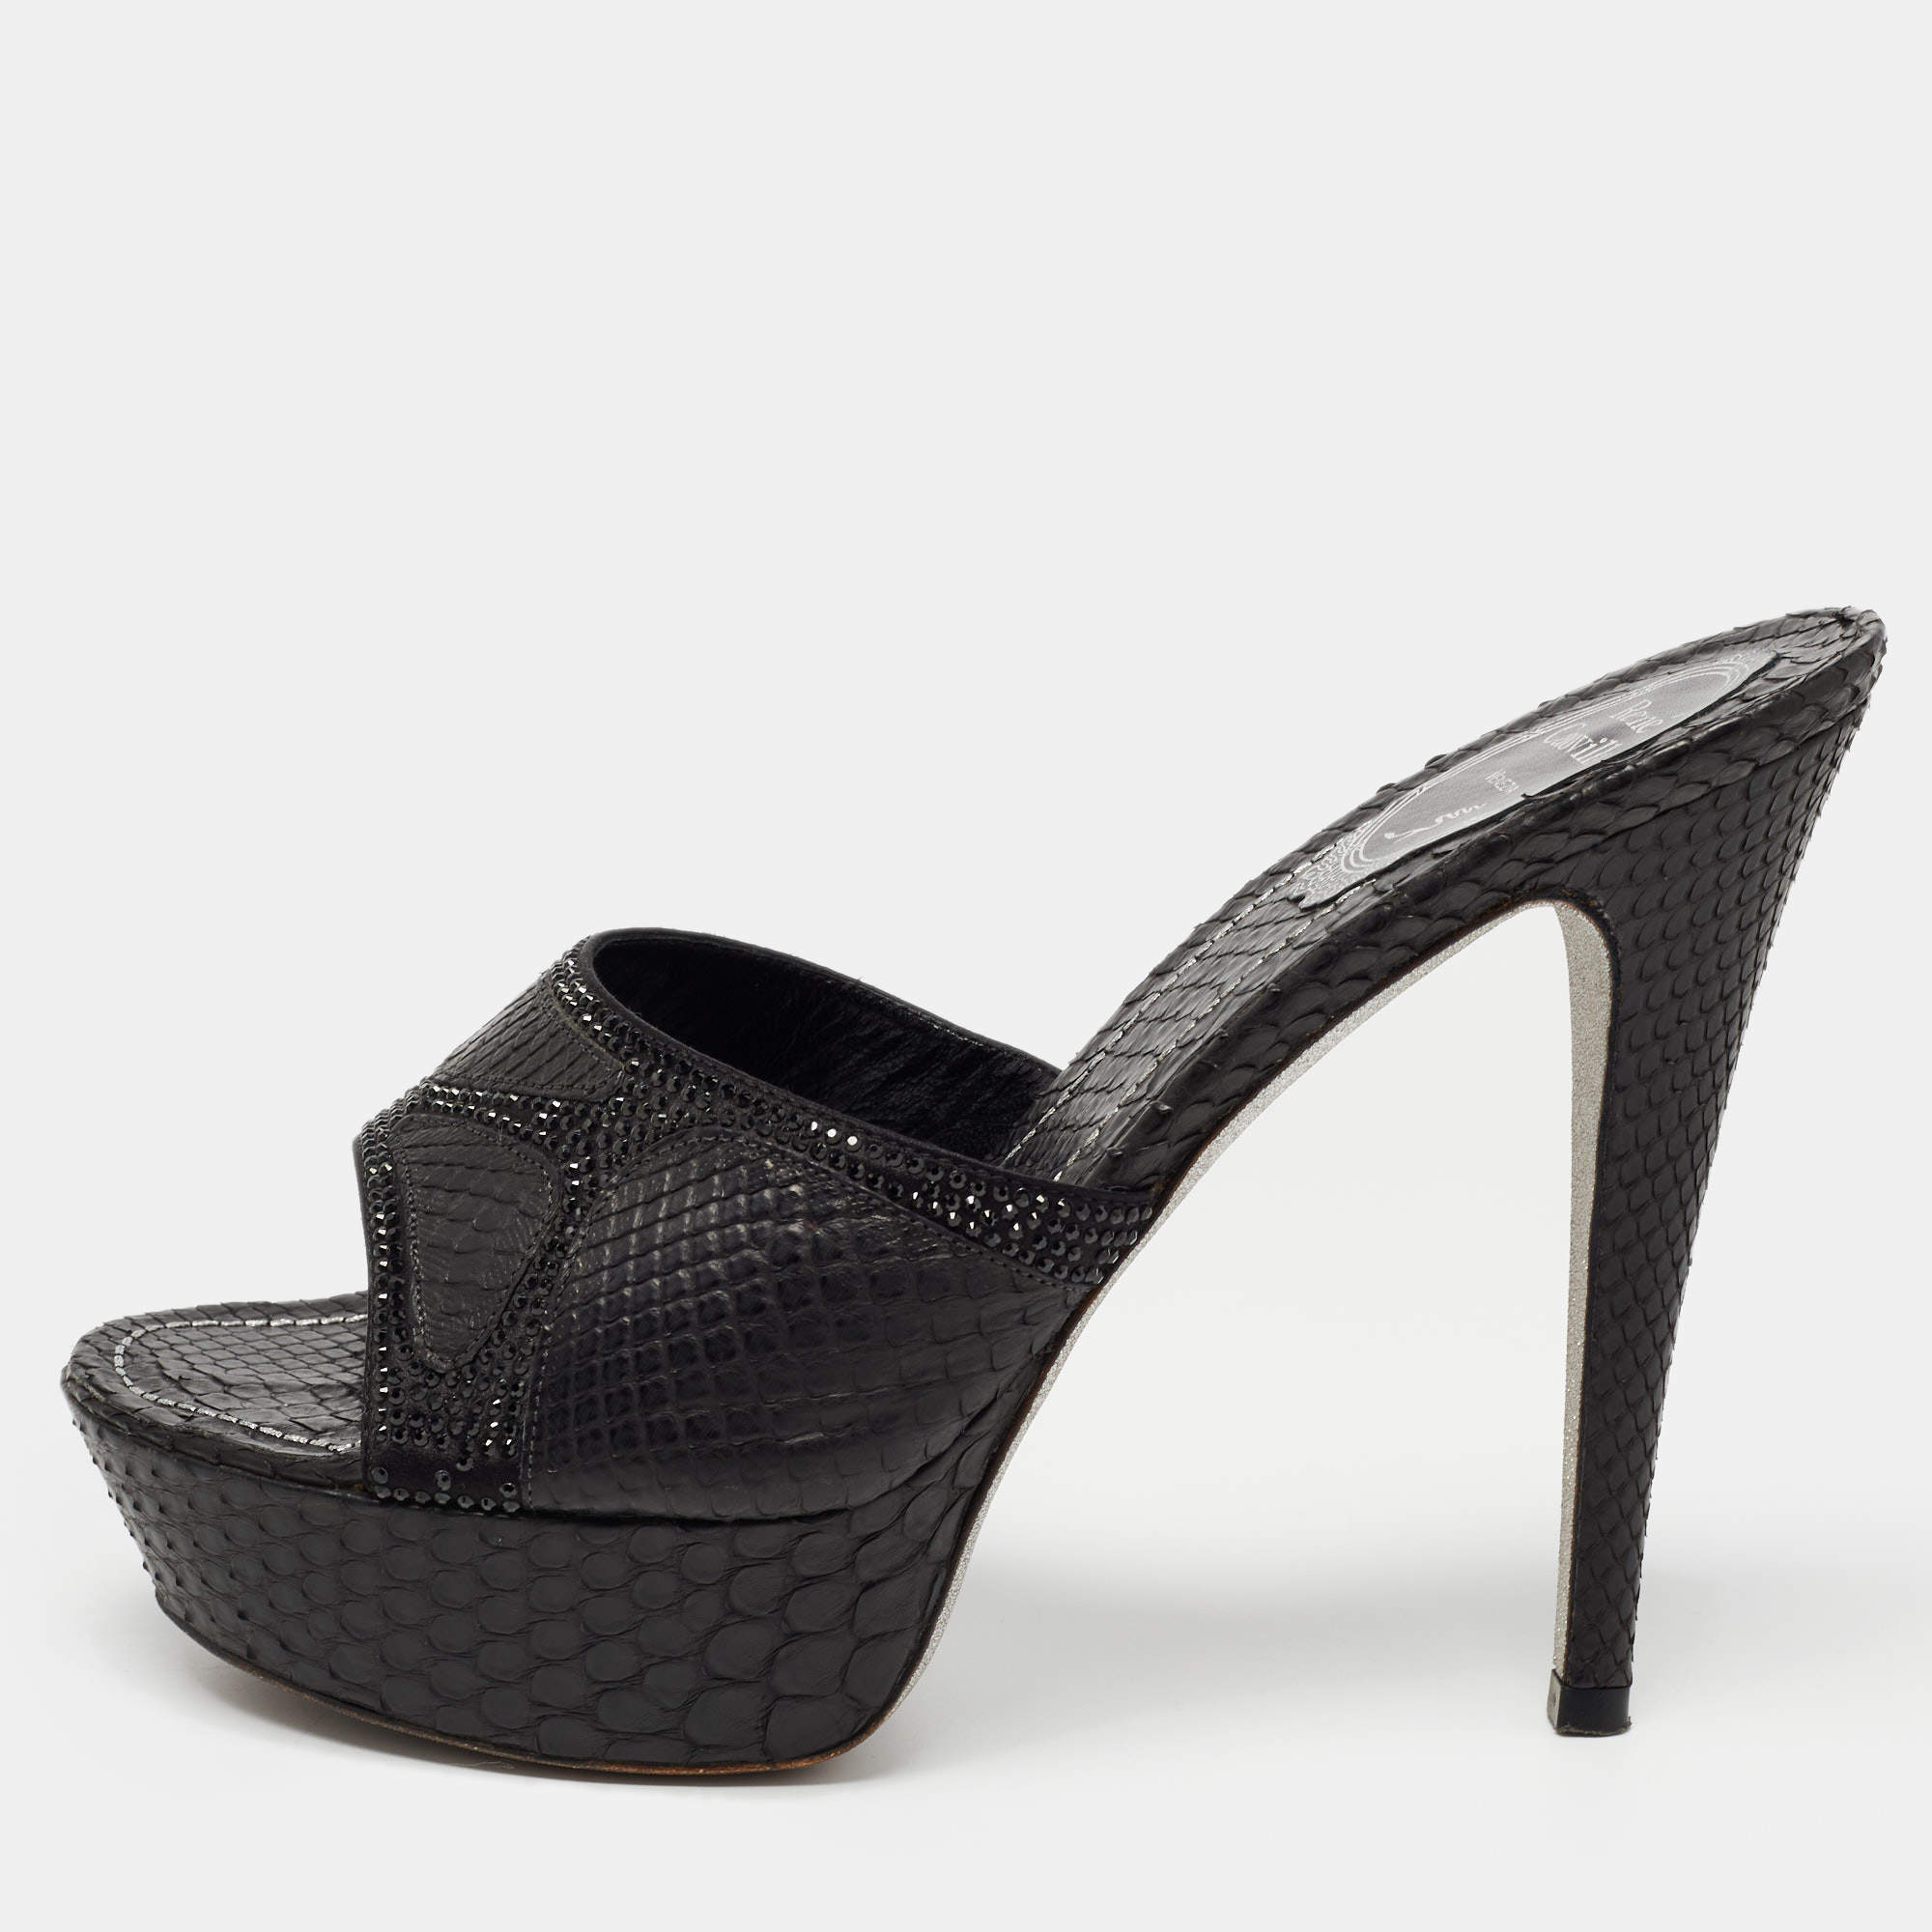 Rene Caovilla Black Watersnake Leather Crystals Embellished Sandals Size 37.5